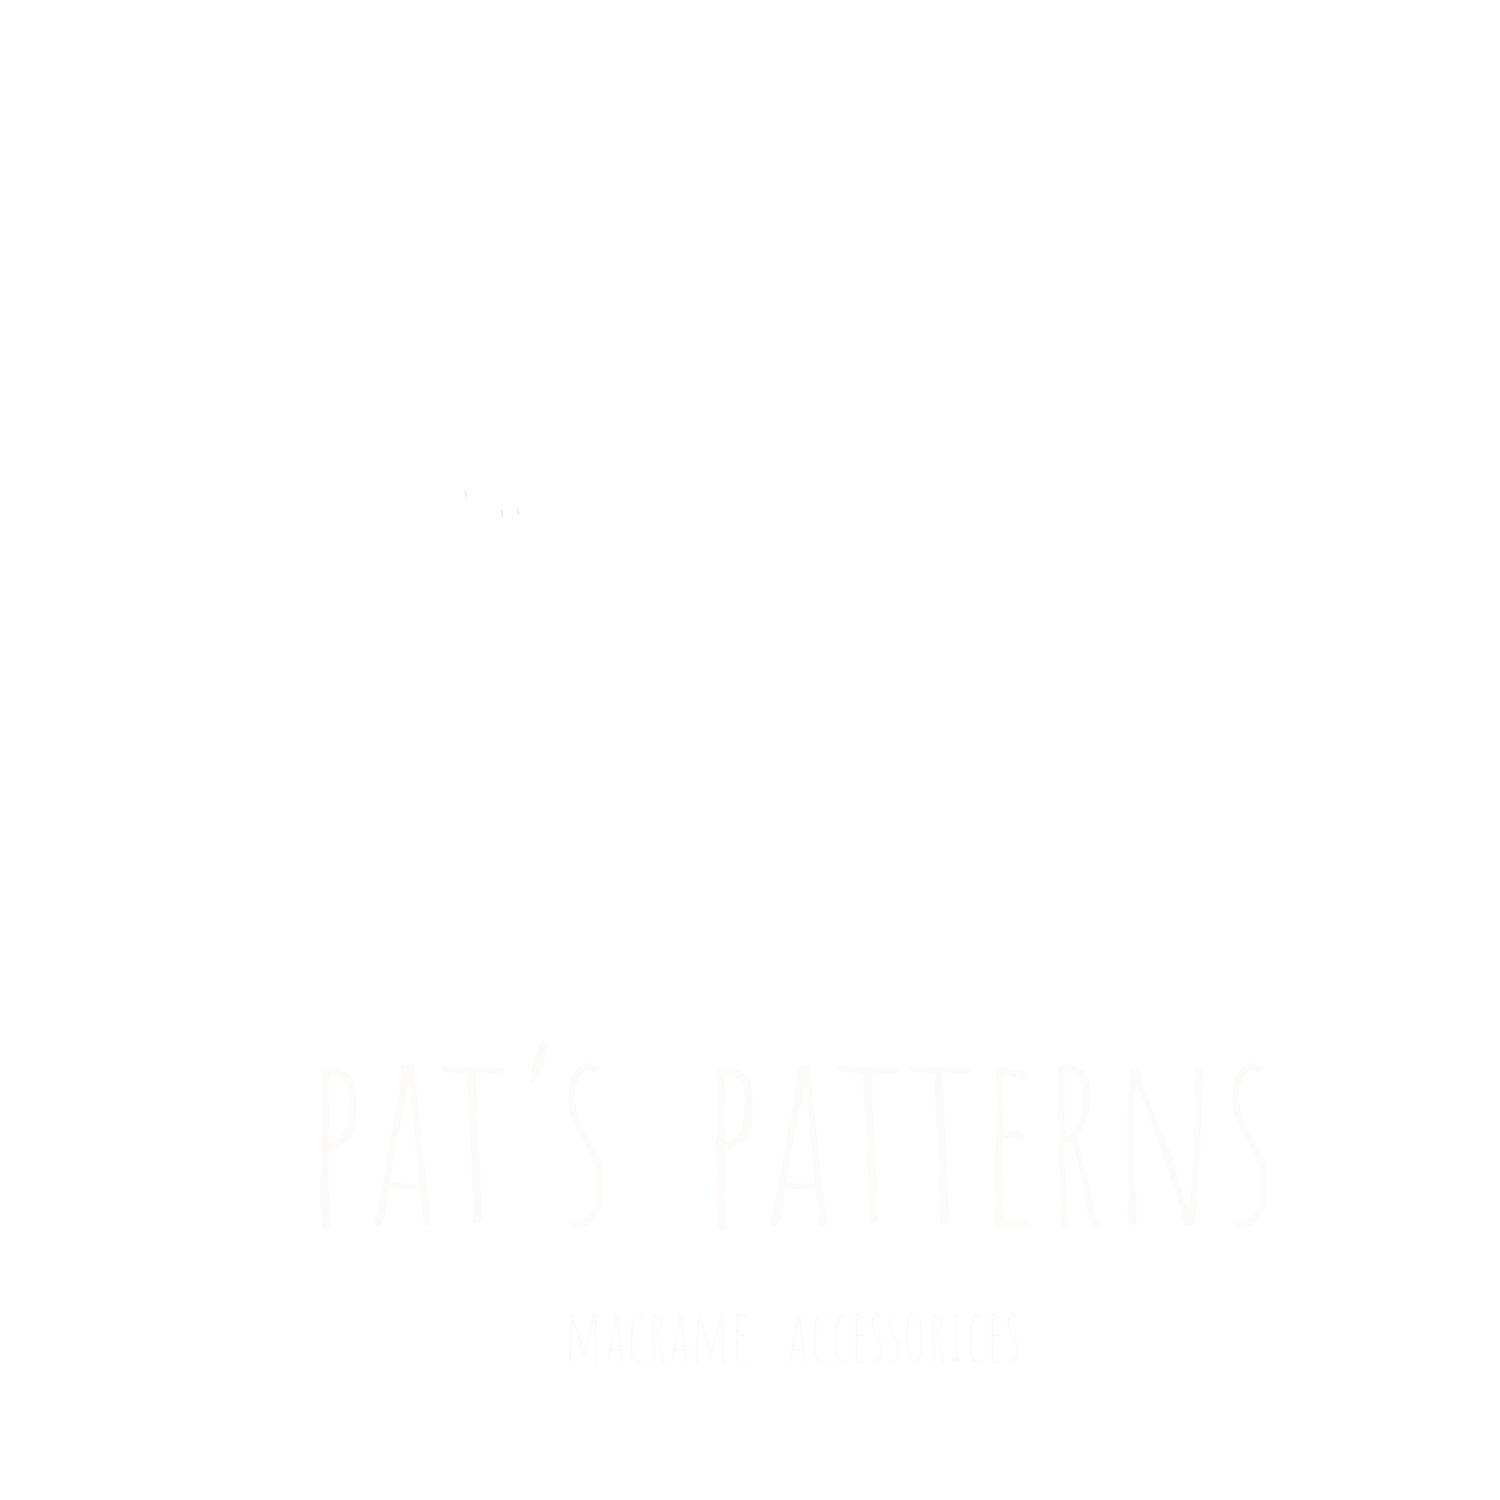 Pat's Patterns